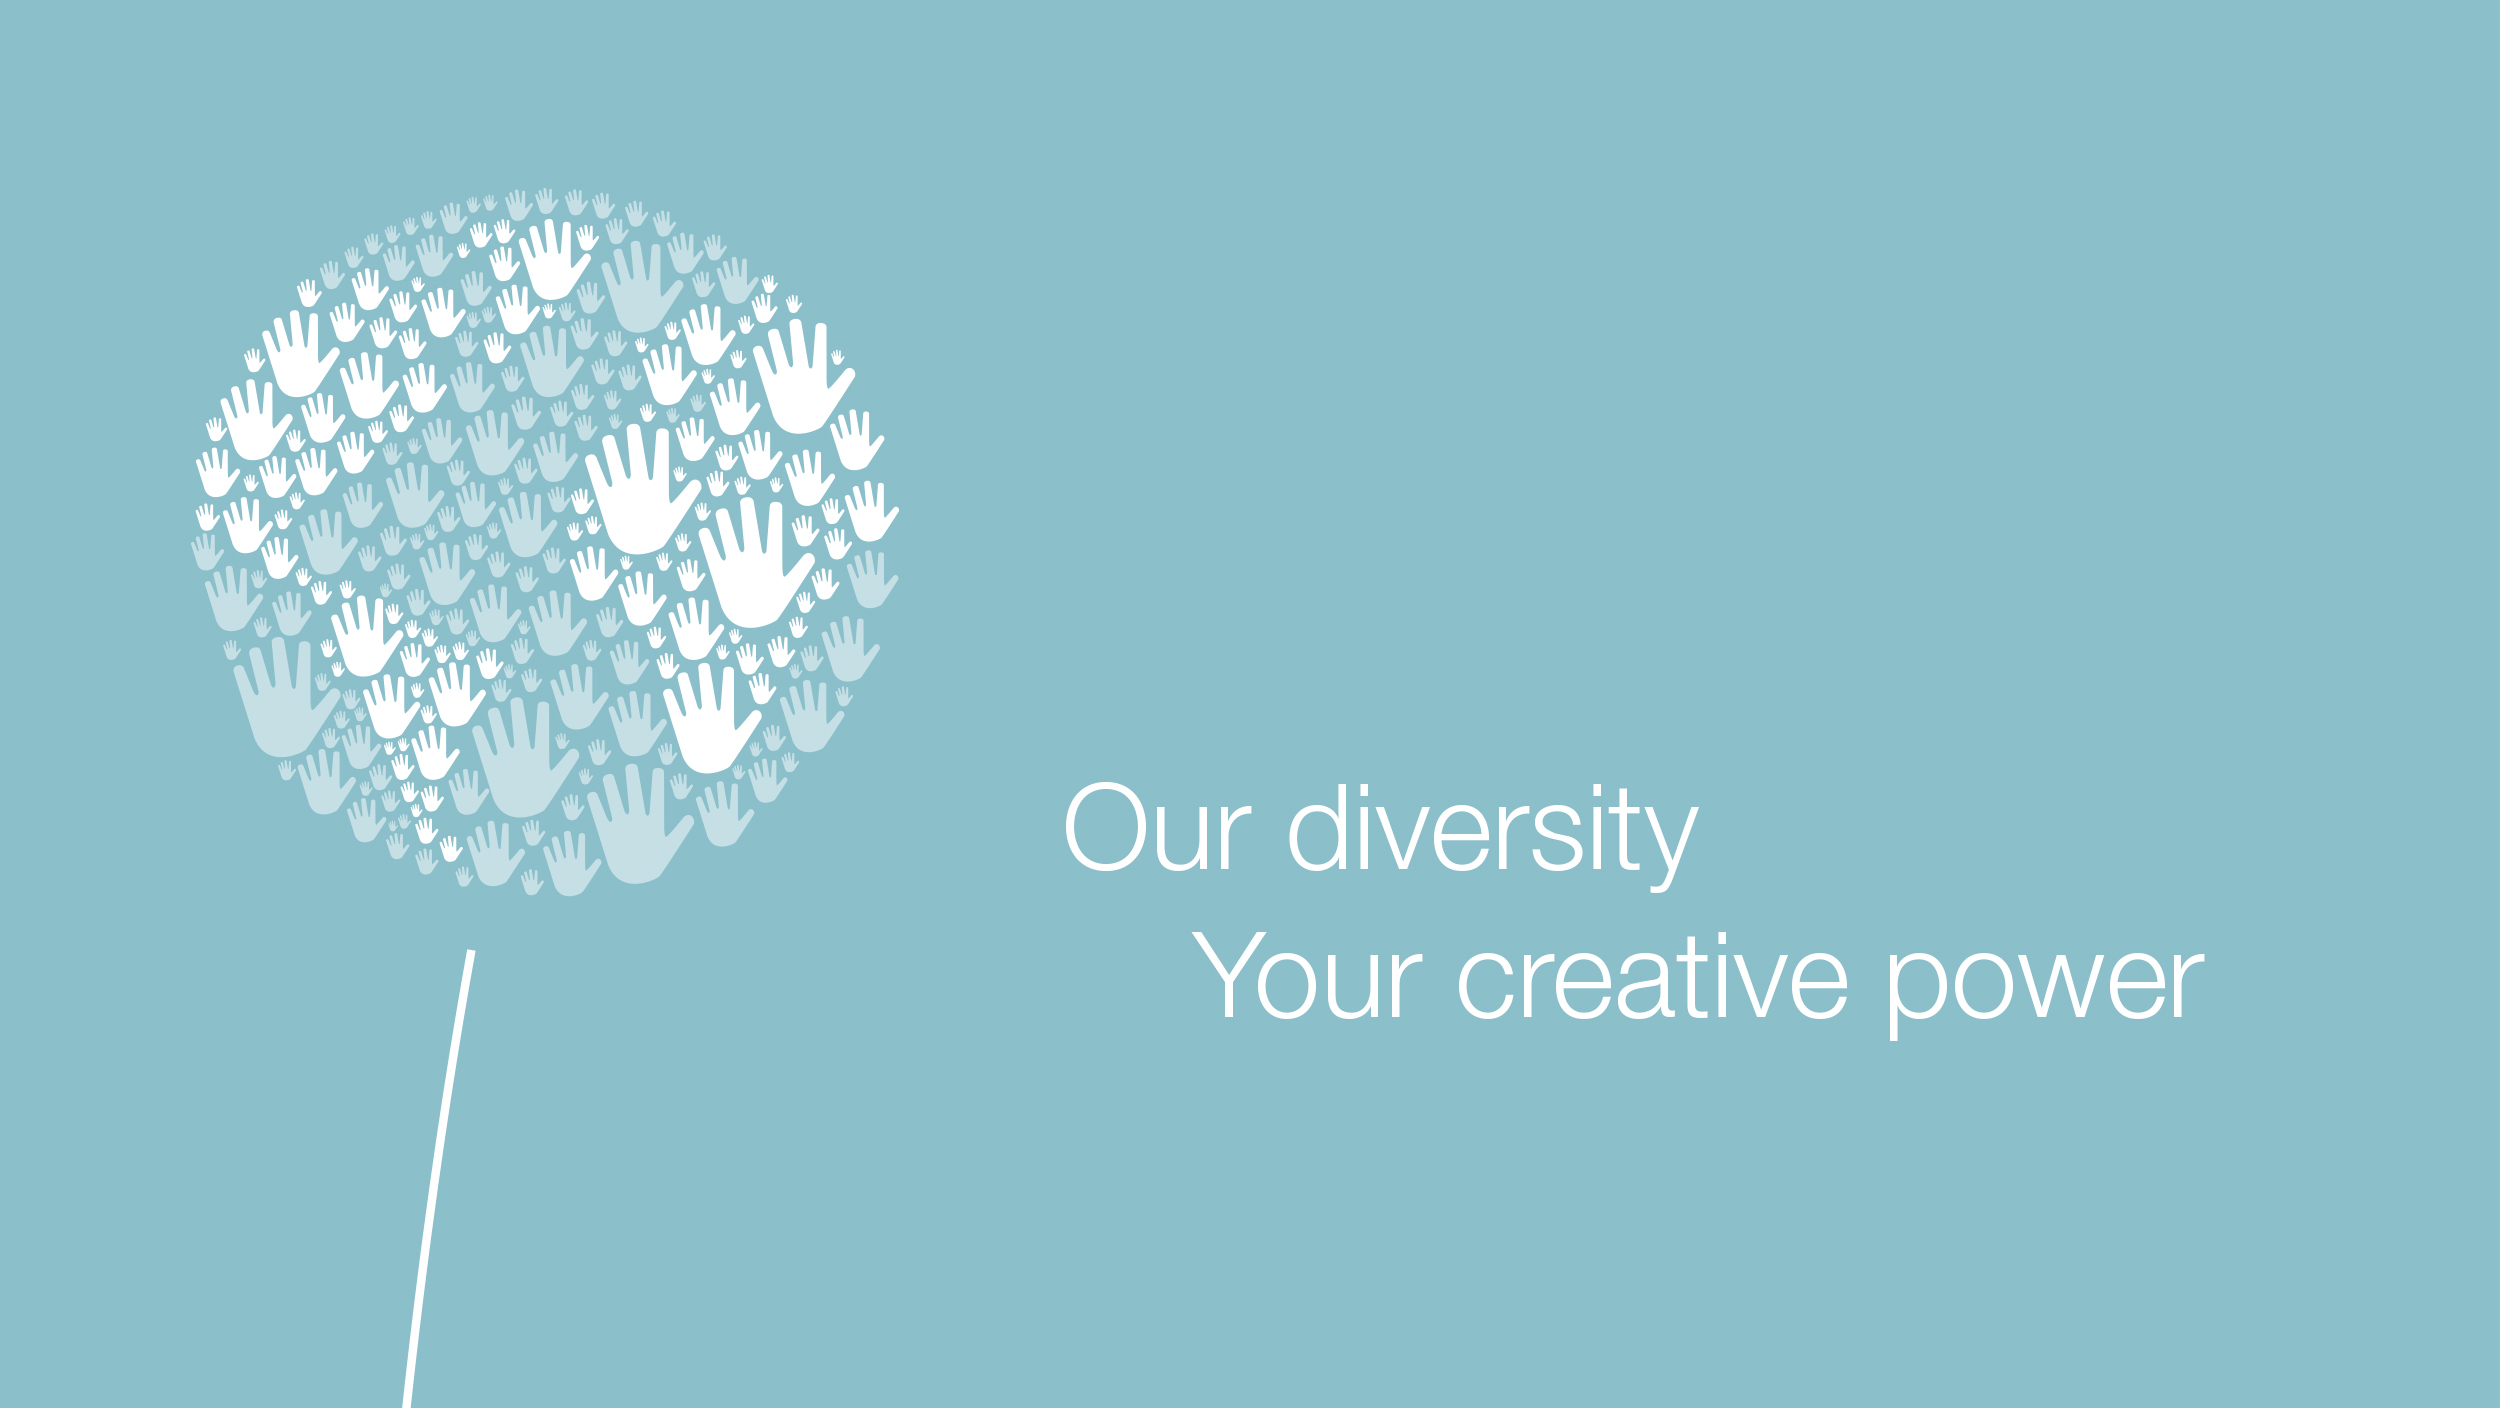 Svet je tvoja ostrica, kako kaže izreka: Naša raznolikost Vaša kreativna snaga